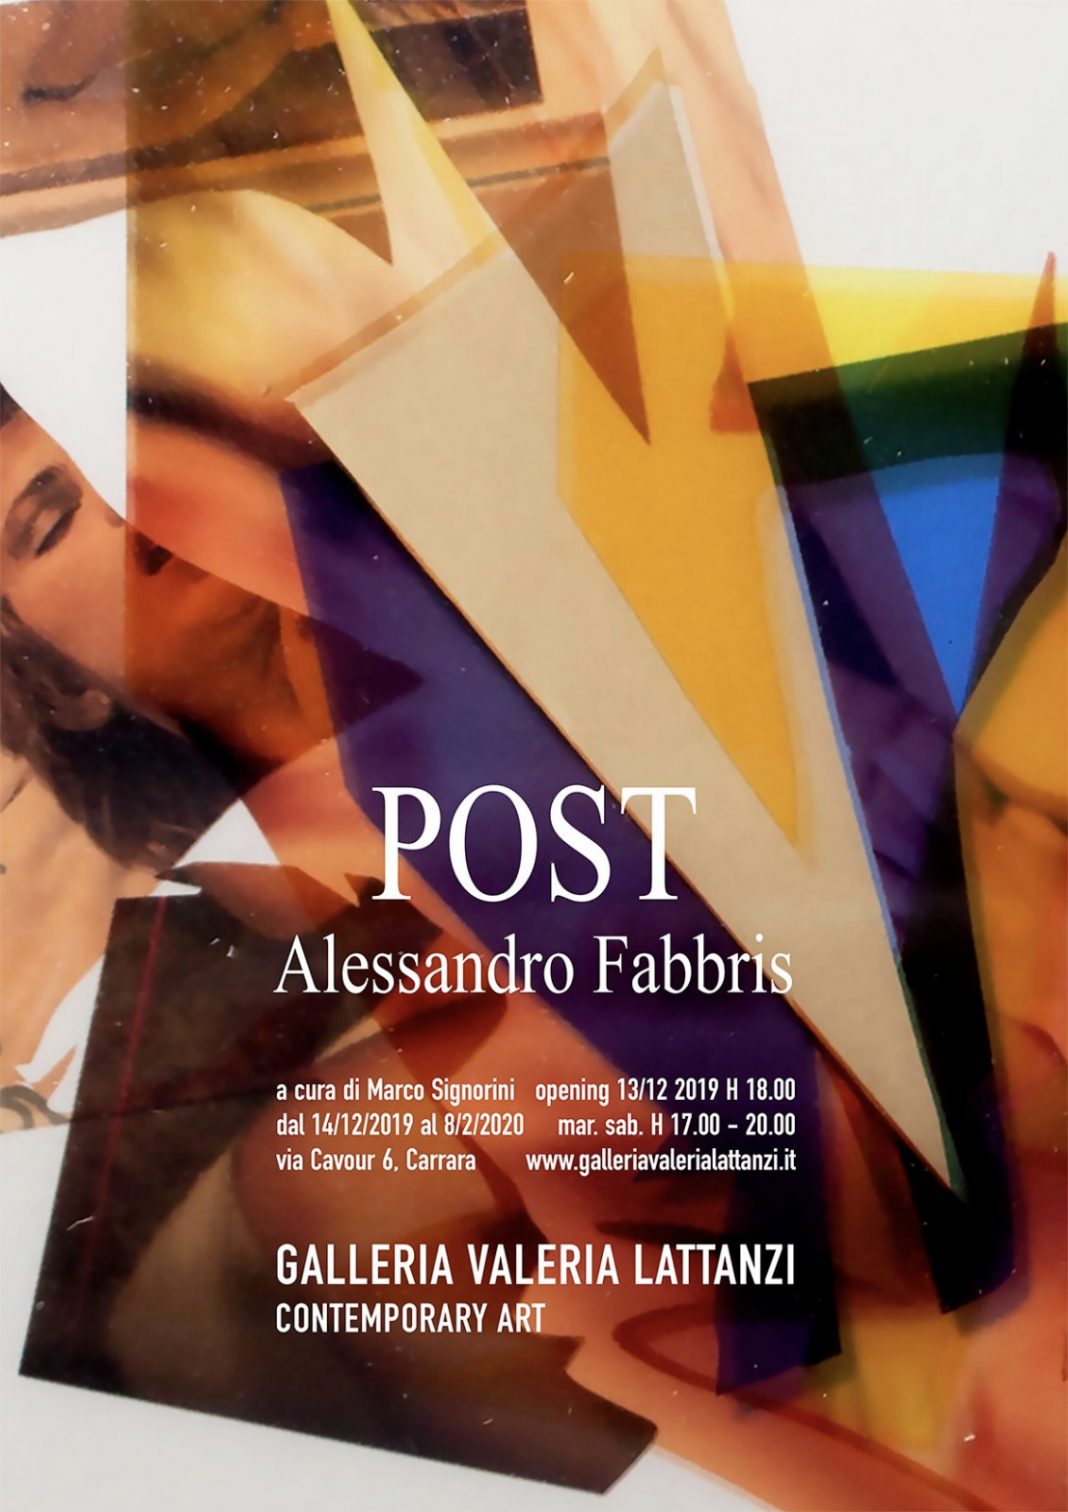 Alessandro Fabbris – Posthttps://www.exibart.com/repository/media/formidable/11/IMG-20191209-WA0036-1068x1512.jpg